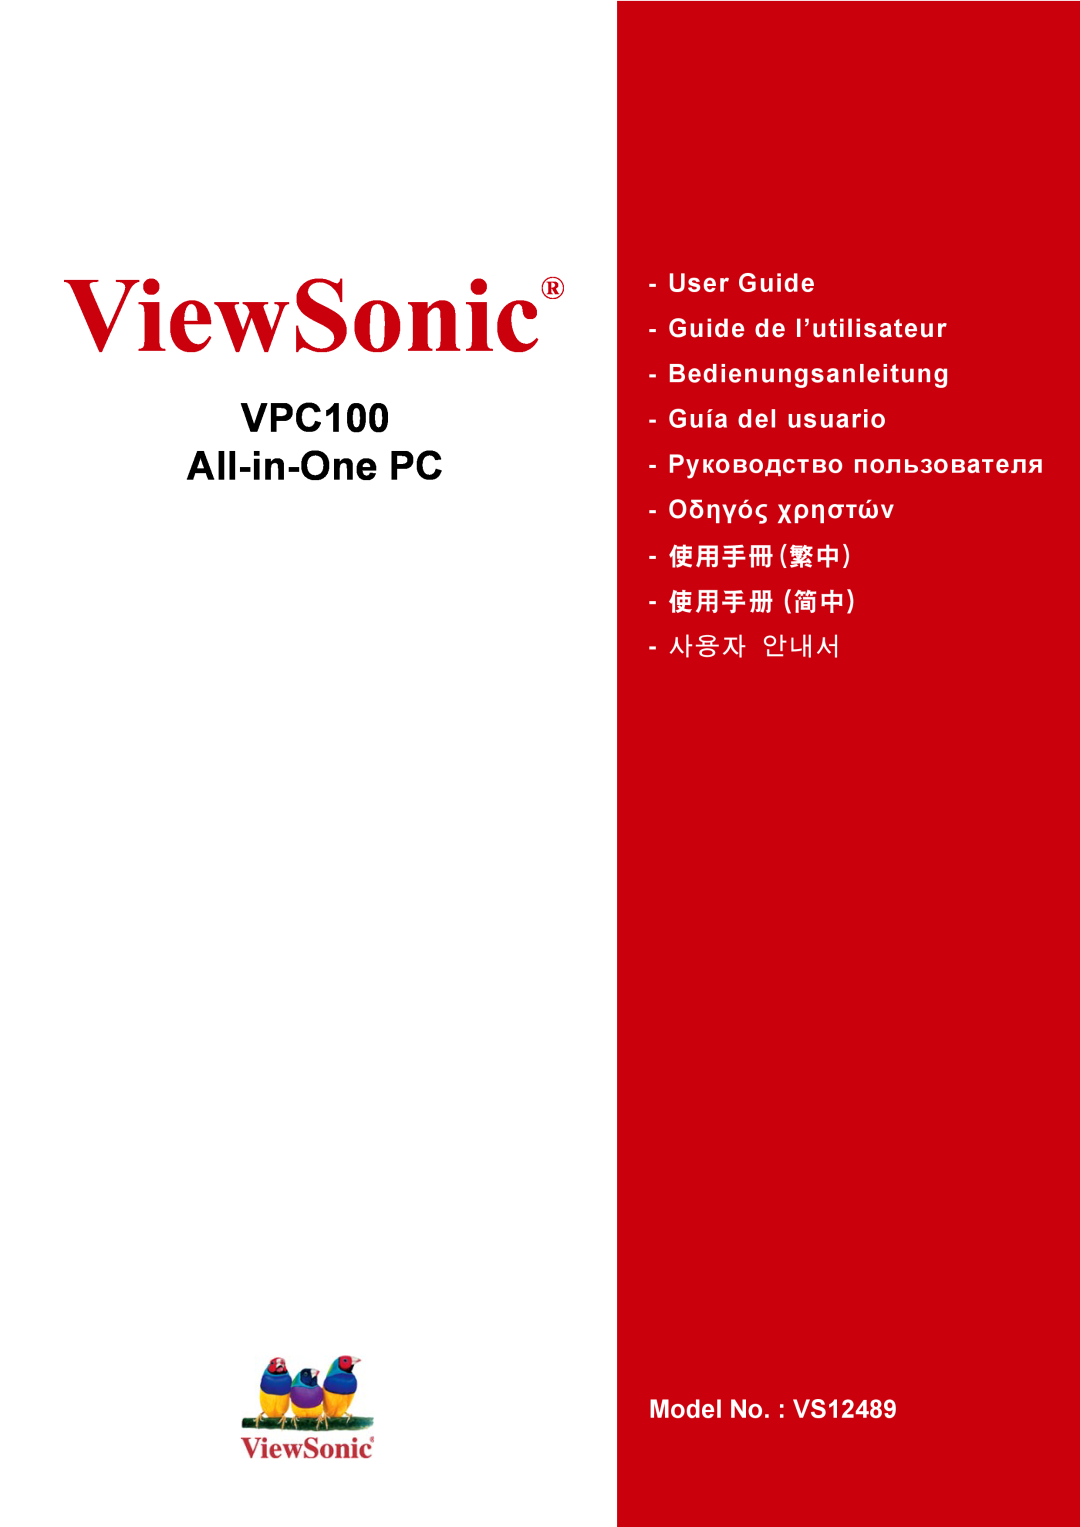 ViewSonic manual ViewSonic, VPC100 All-in-OnePC, User Guide Guide de l’utilisateur, 使用手冊繁中 使用手冊 簡中, 사용자 안내서 